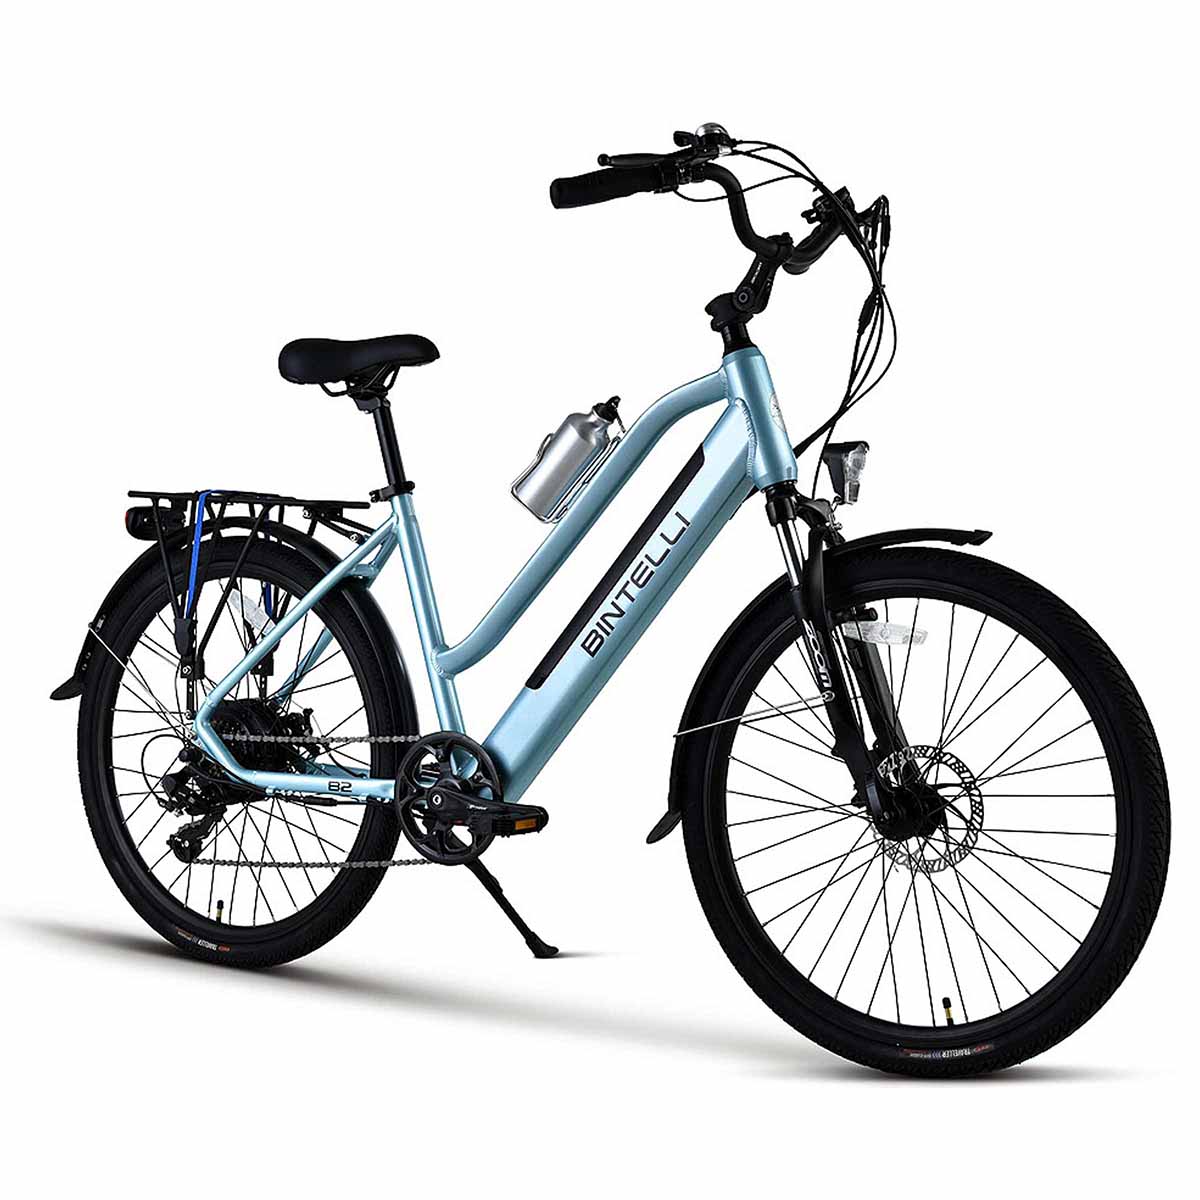 Super sleek and stylish Bintelli B2 Aqua electric bicycle with 10AH lithium-ion battery